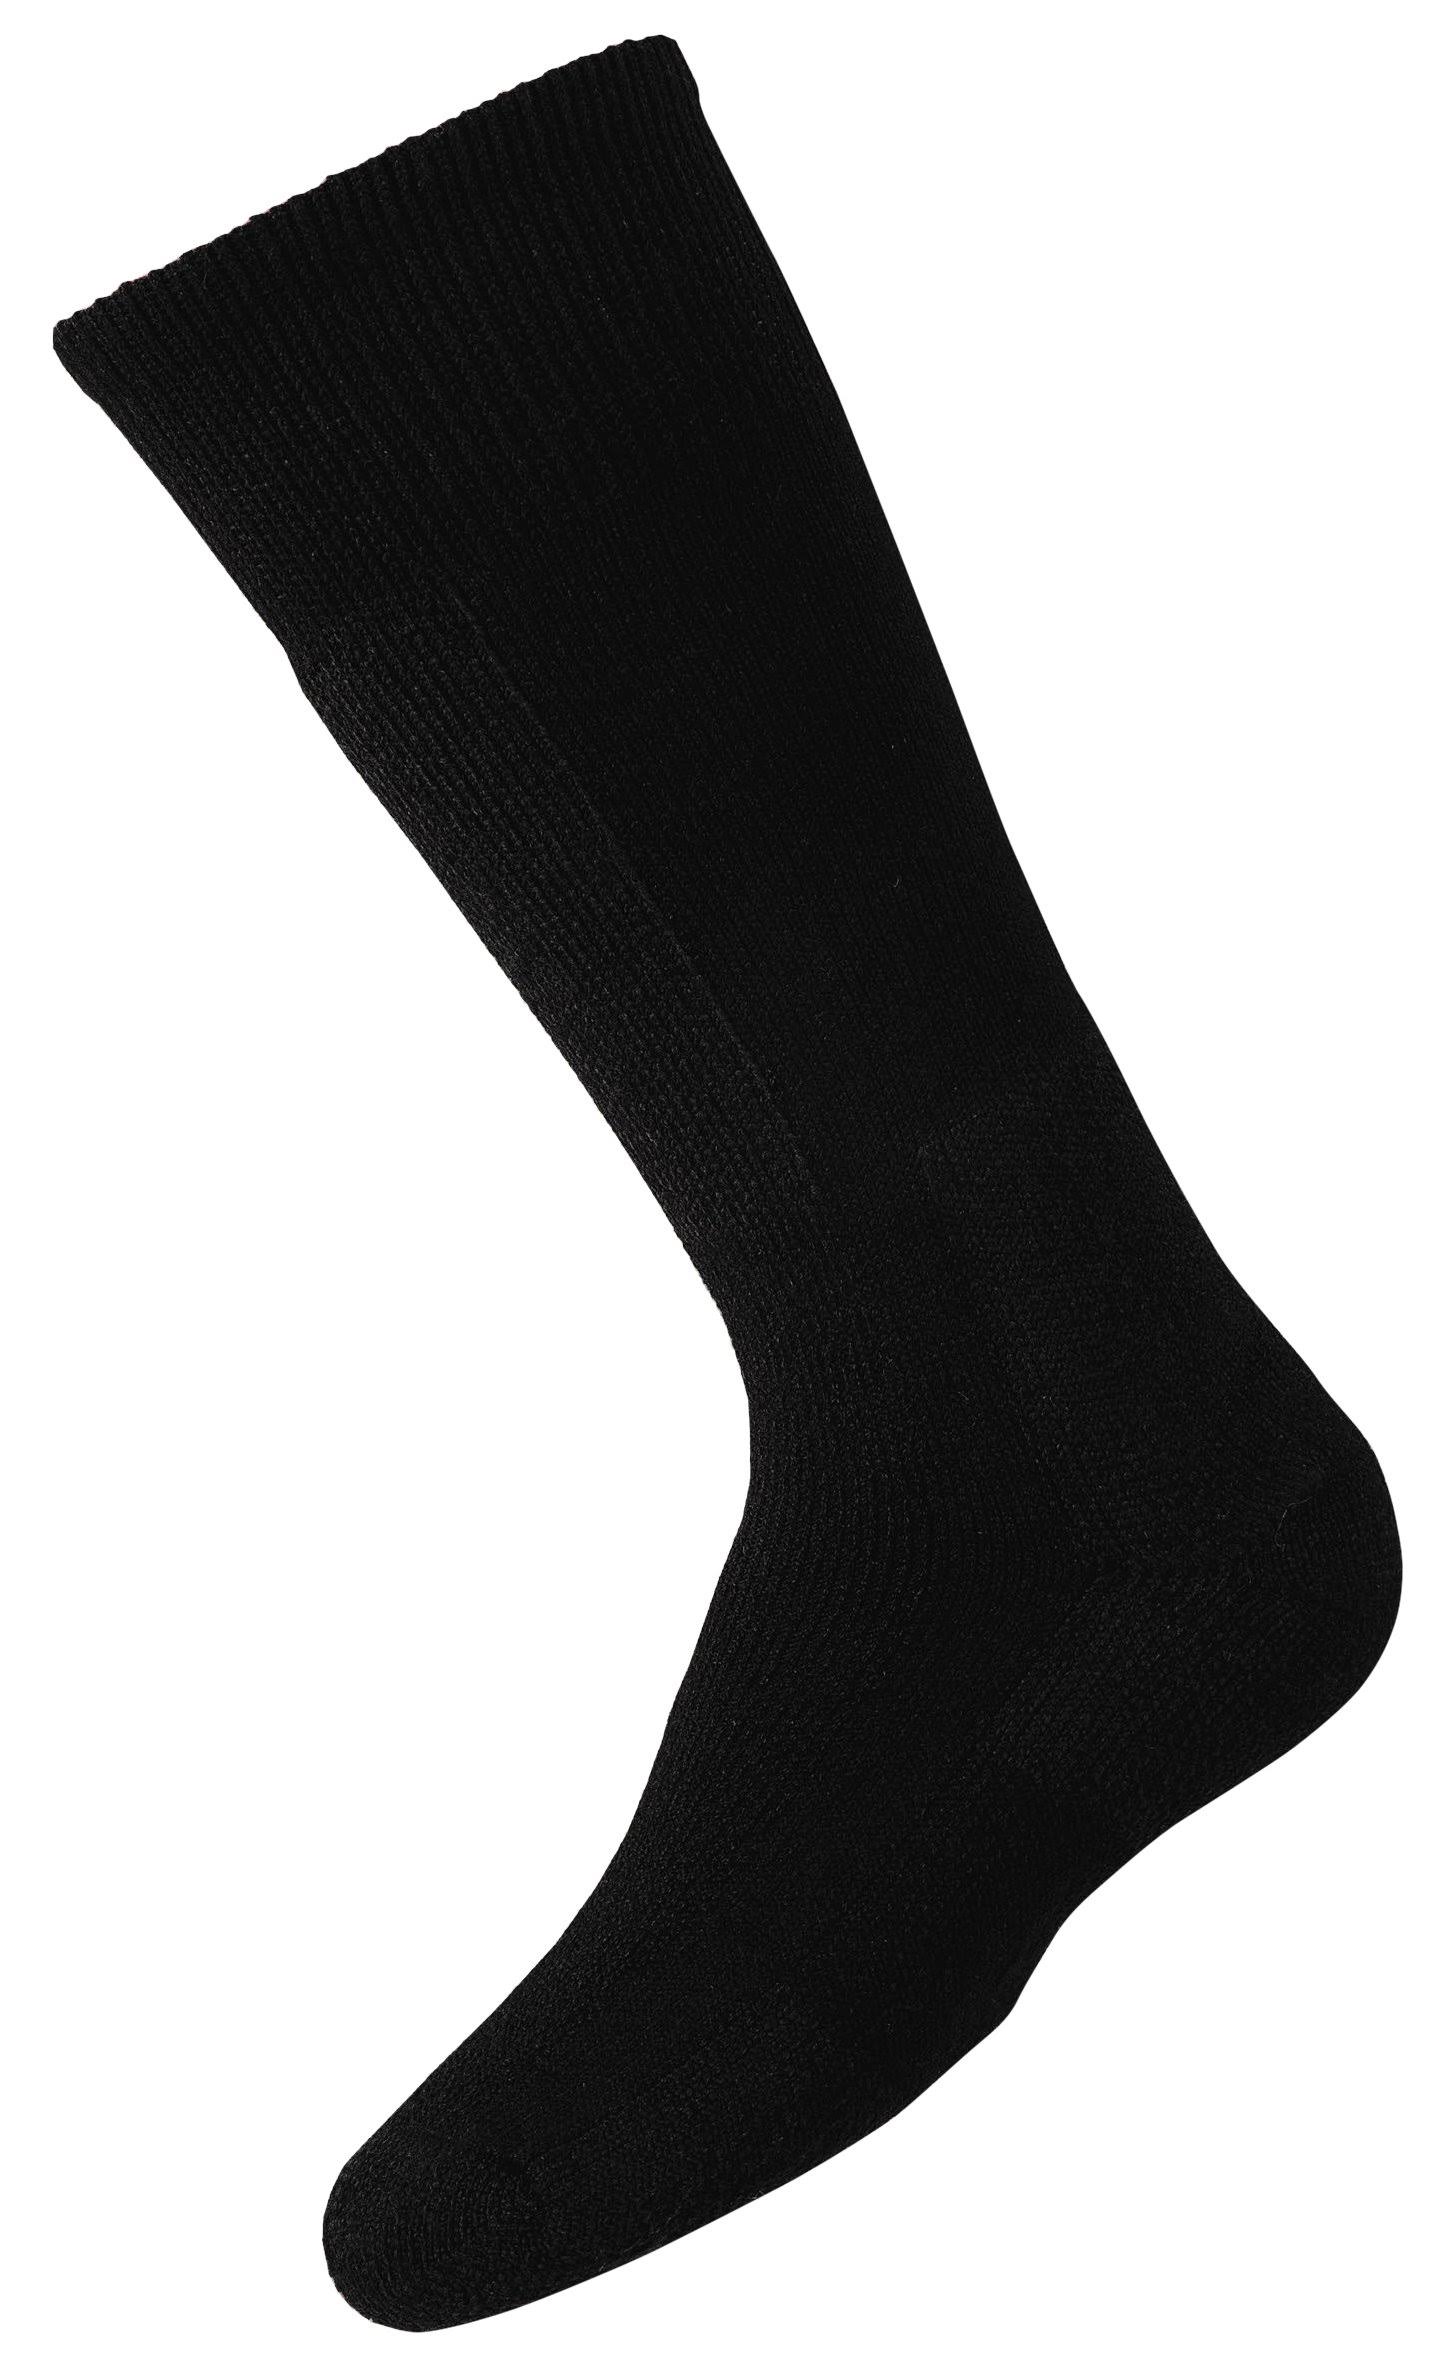 Thorlos Moderate Padded Over the Calf Snow Socks - Black, Small